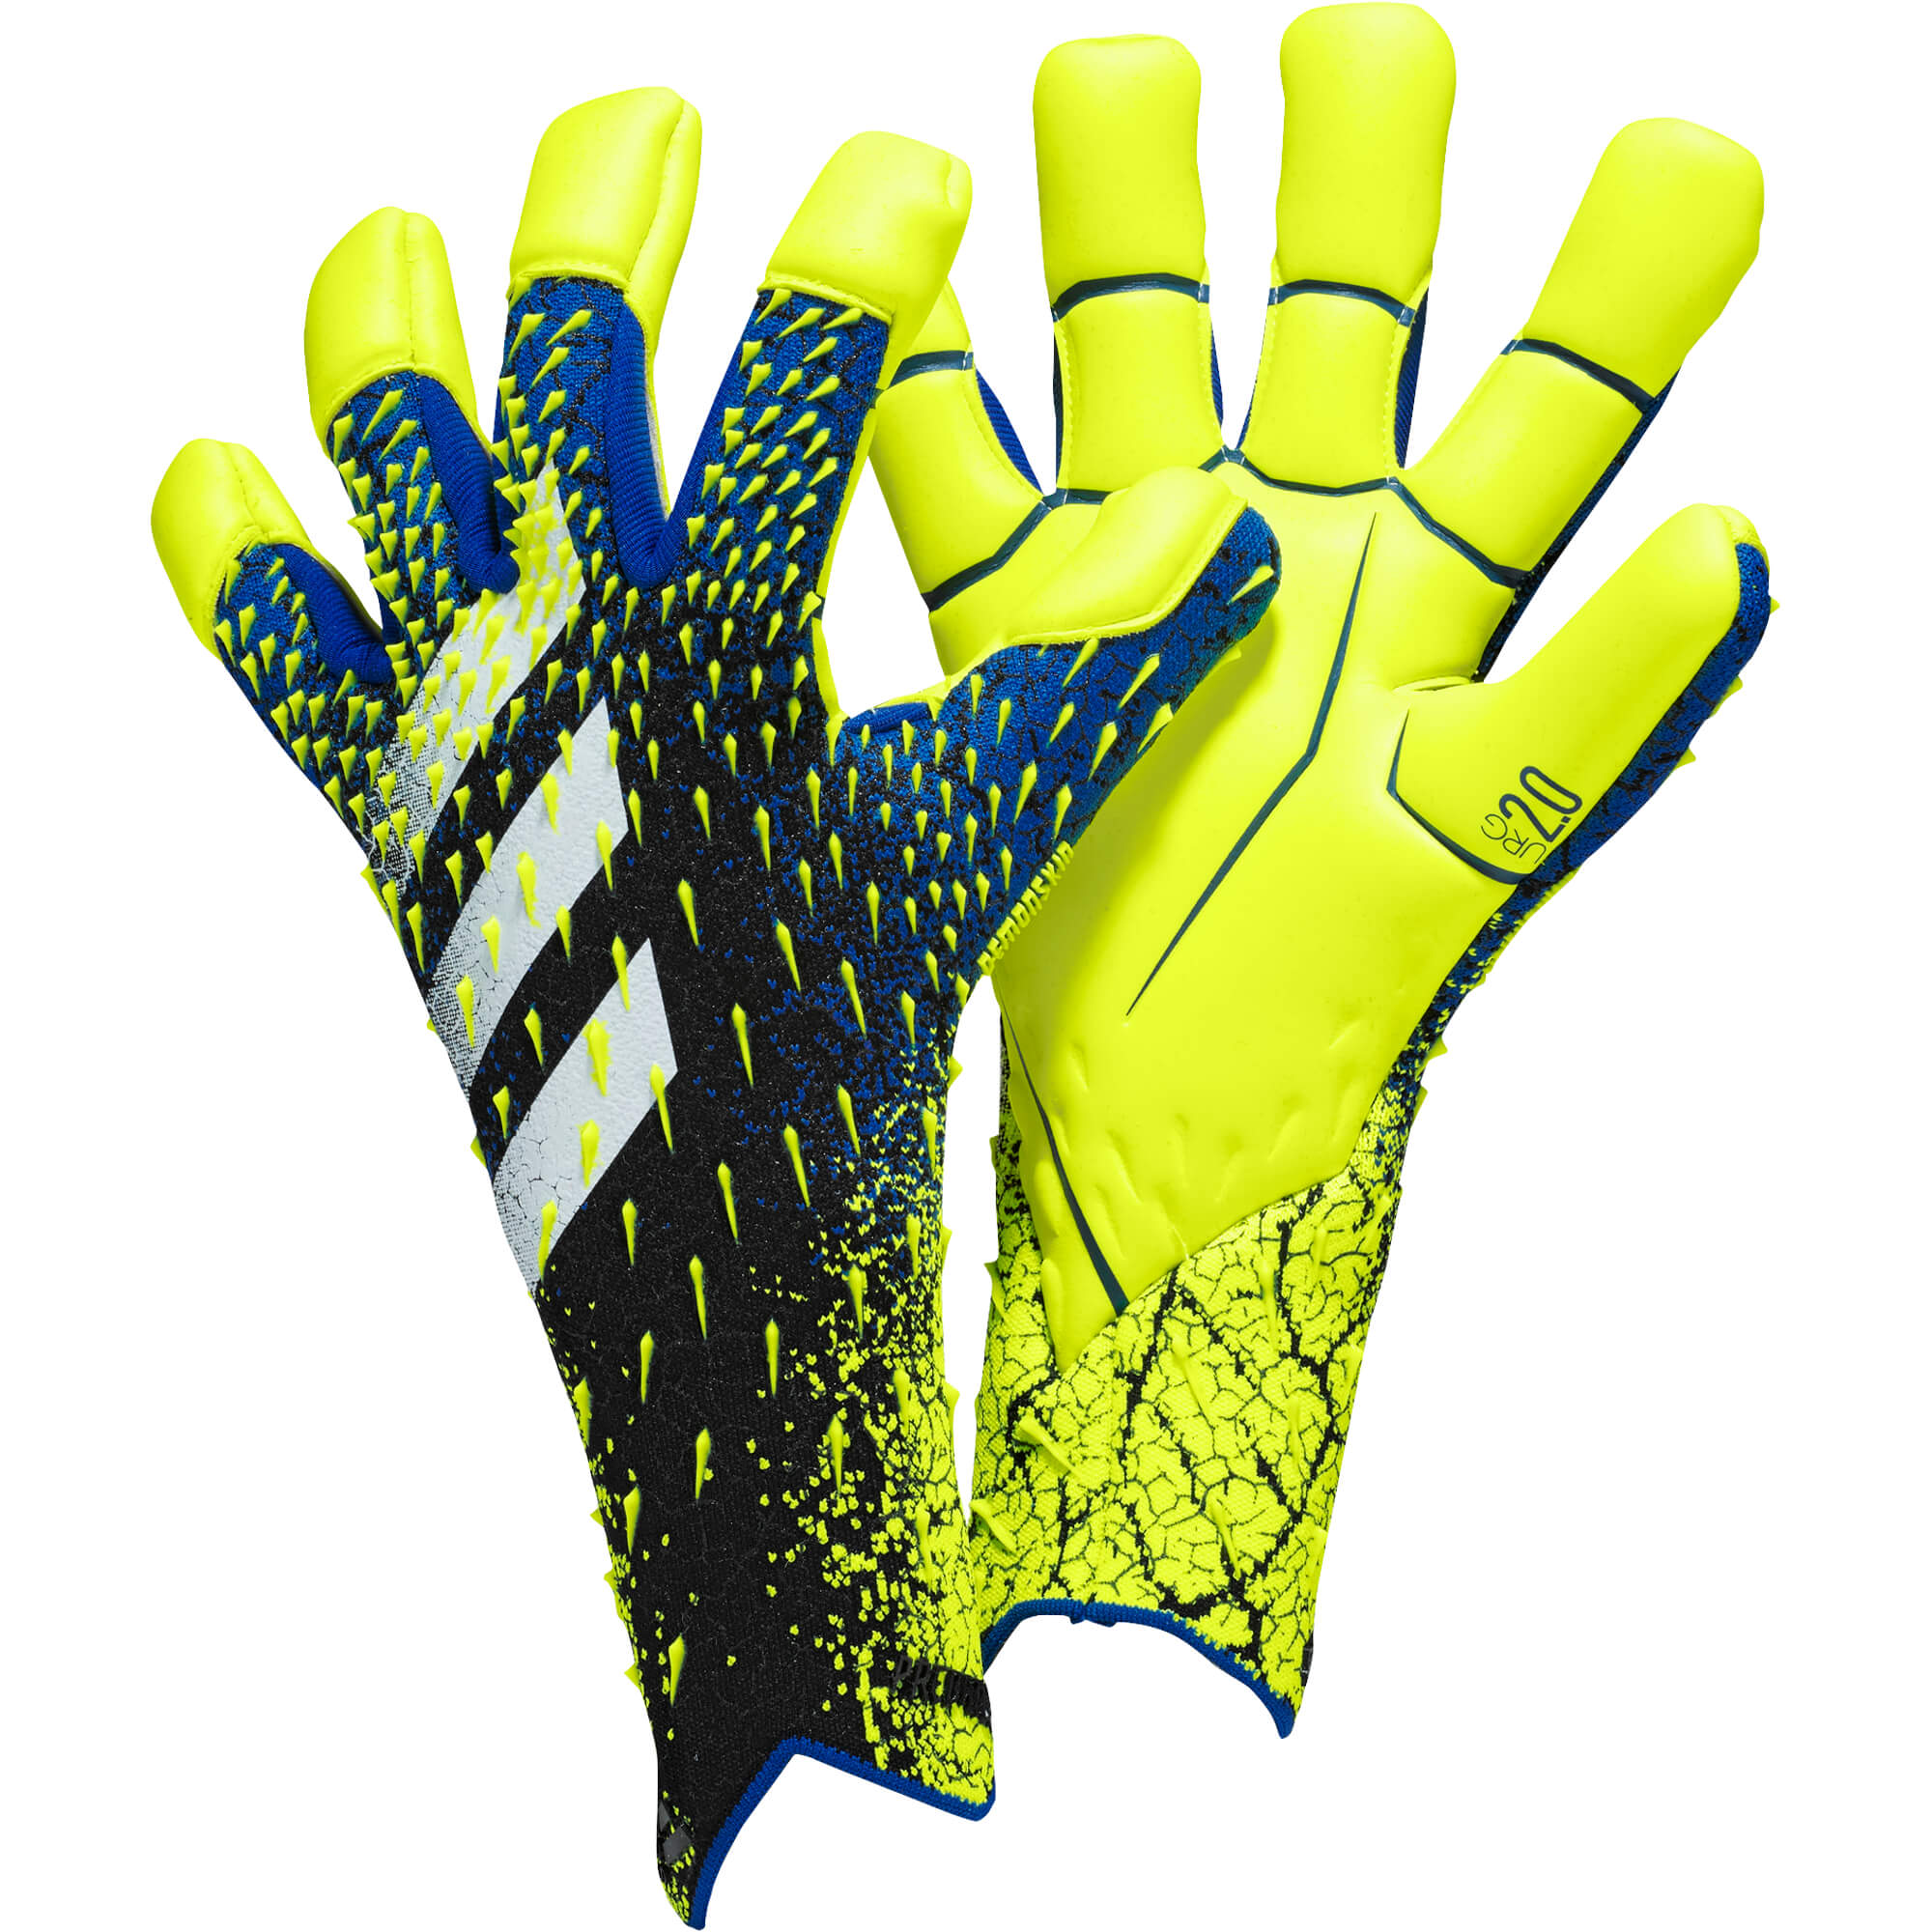 GL Pro Blue Solar Yellow Handschoenen Kopen?